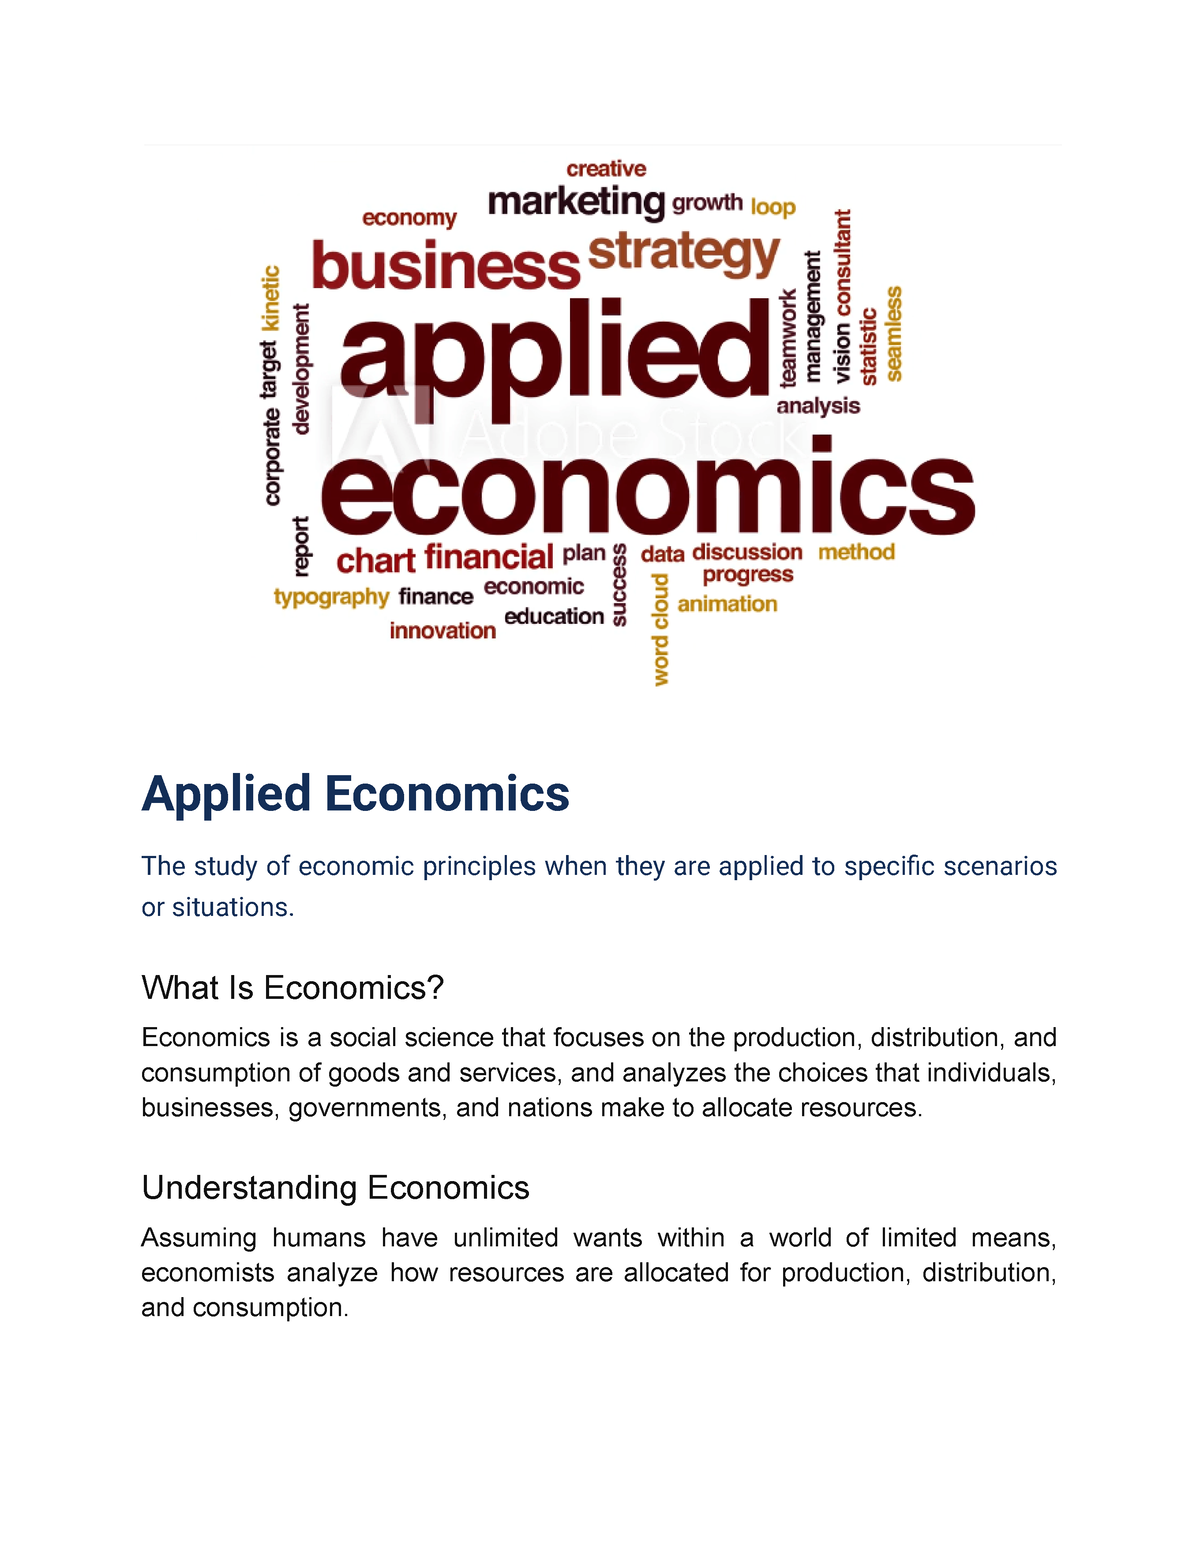 essay about applied economics brainly